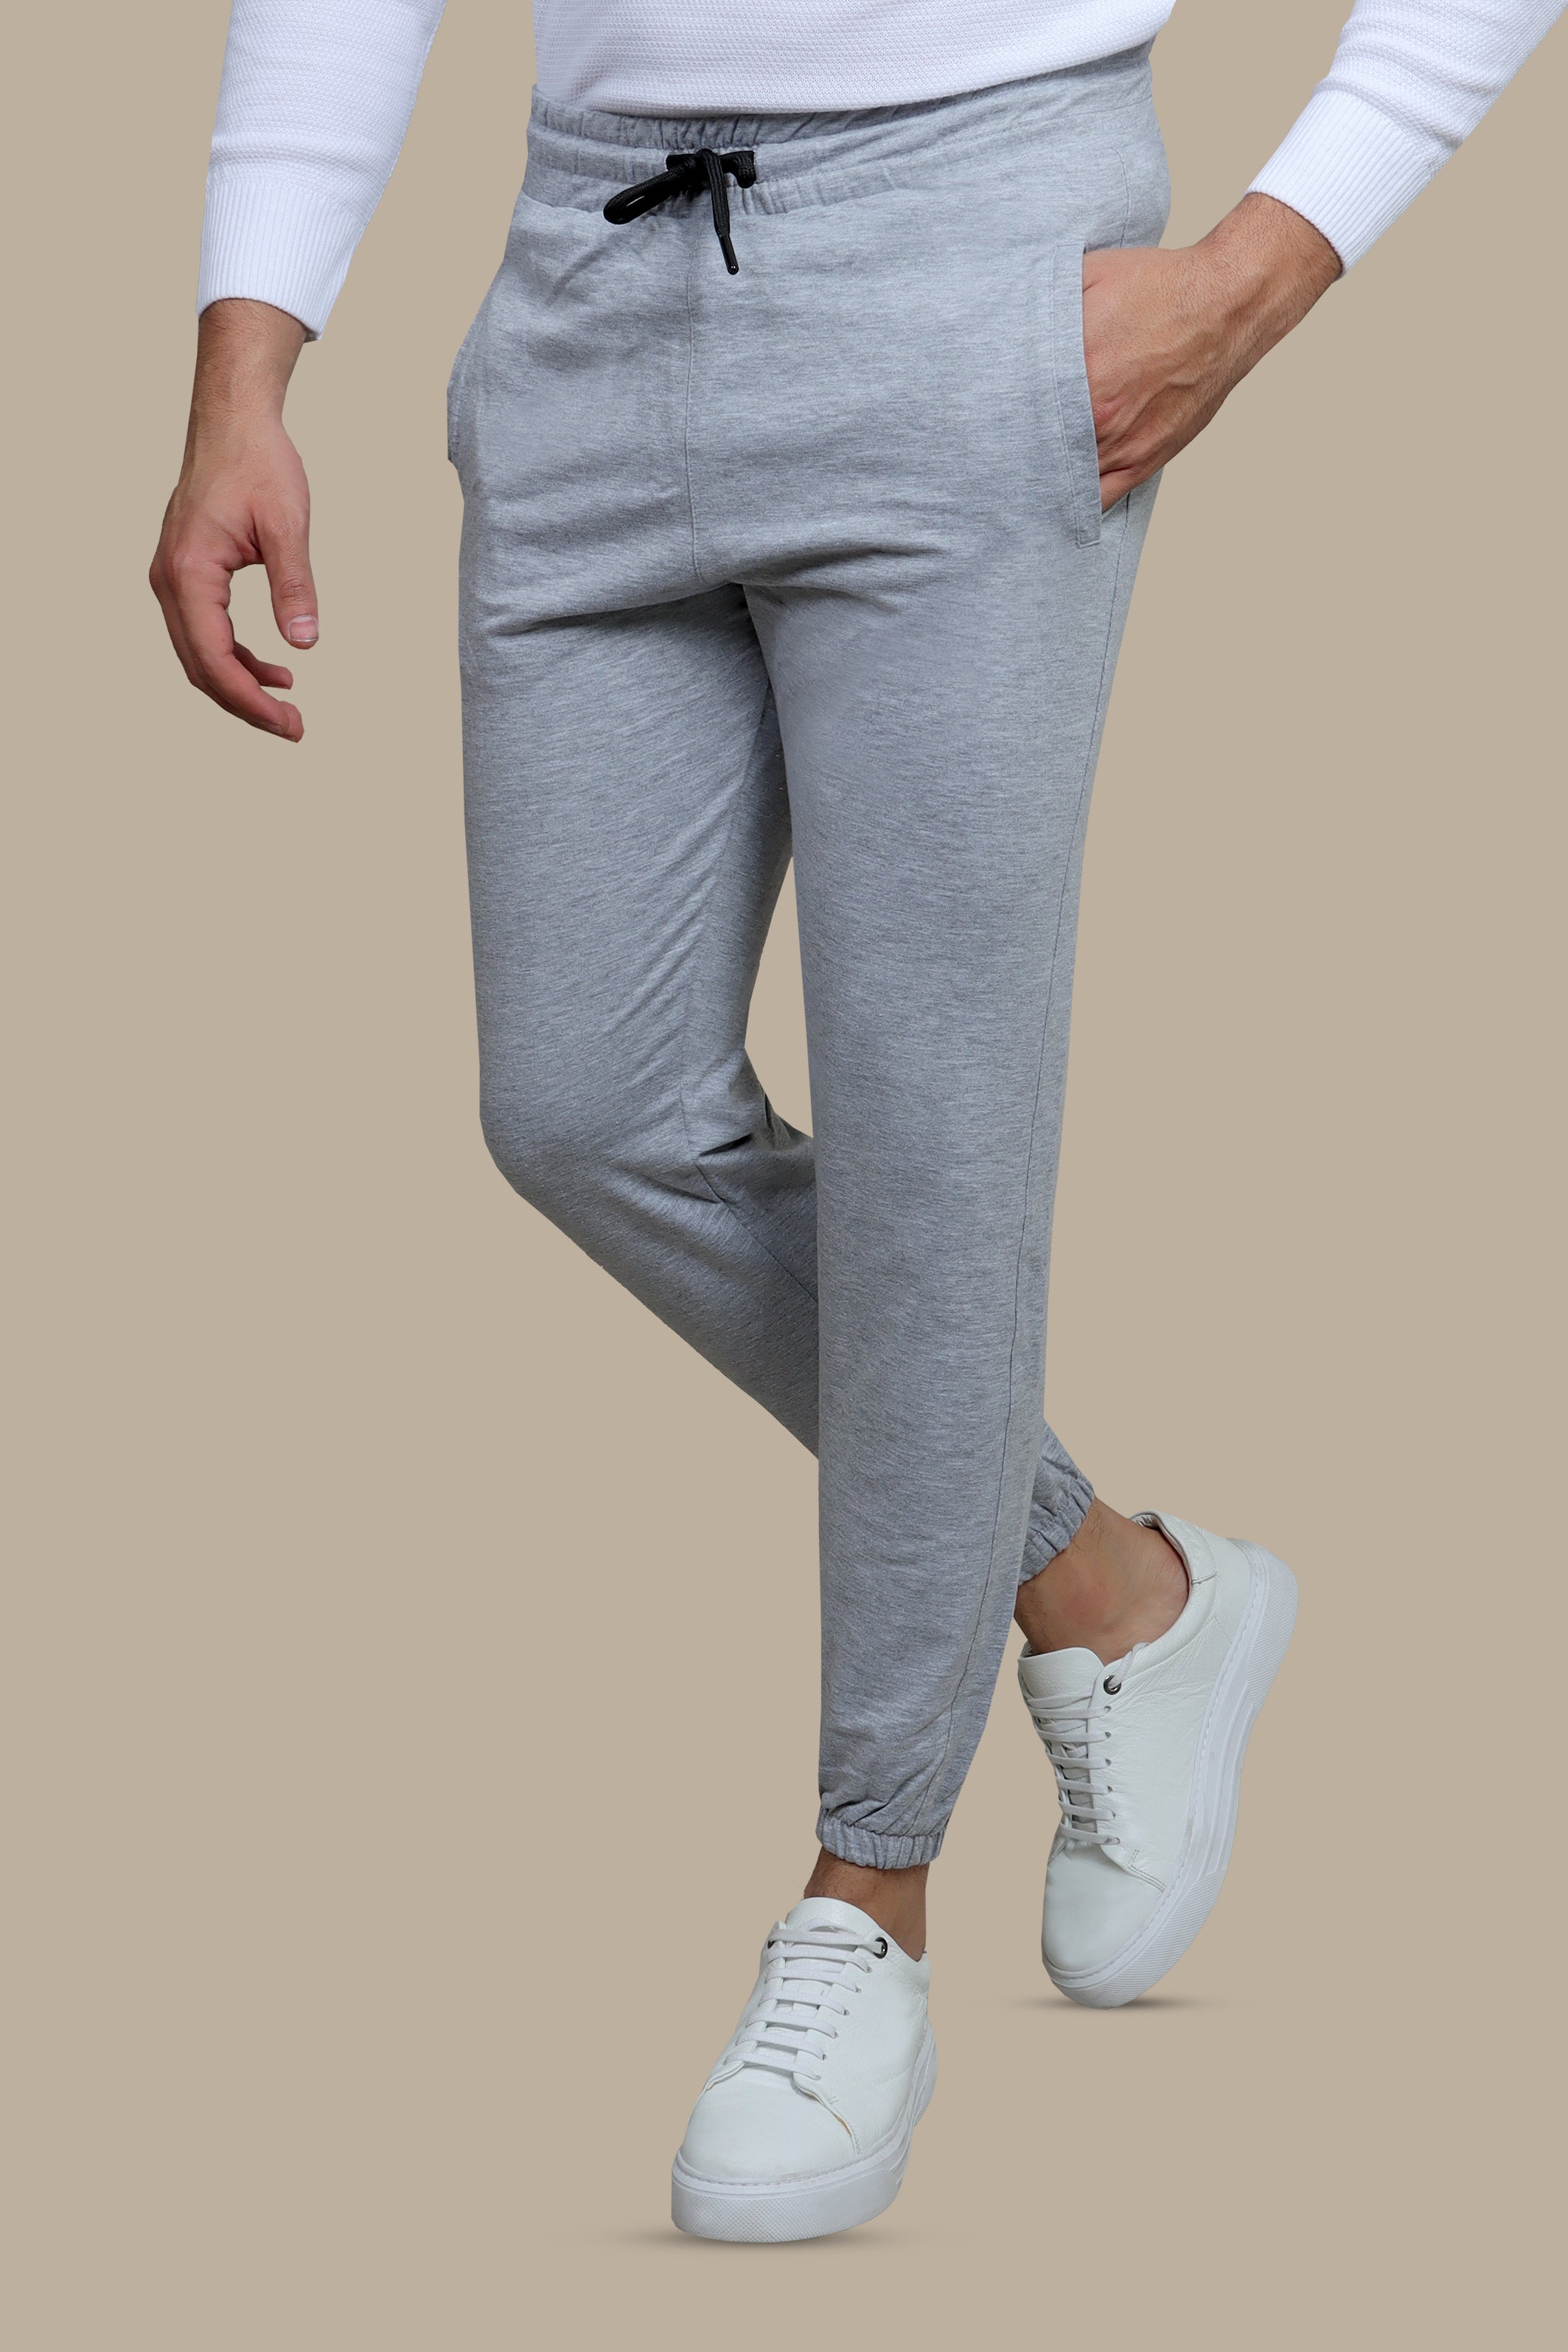 Essential Comfort: Basic Light Grey Jogging Pants